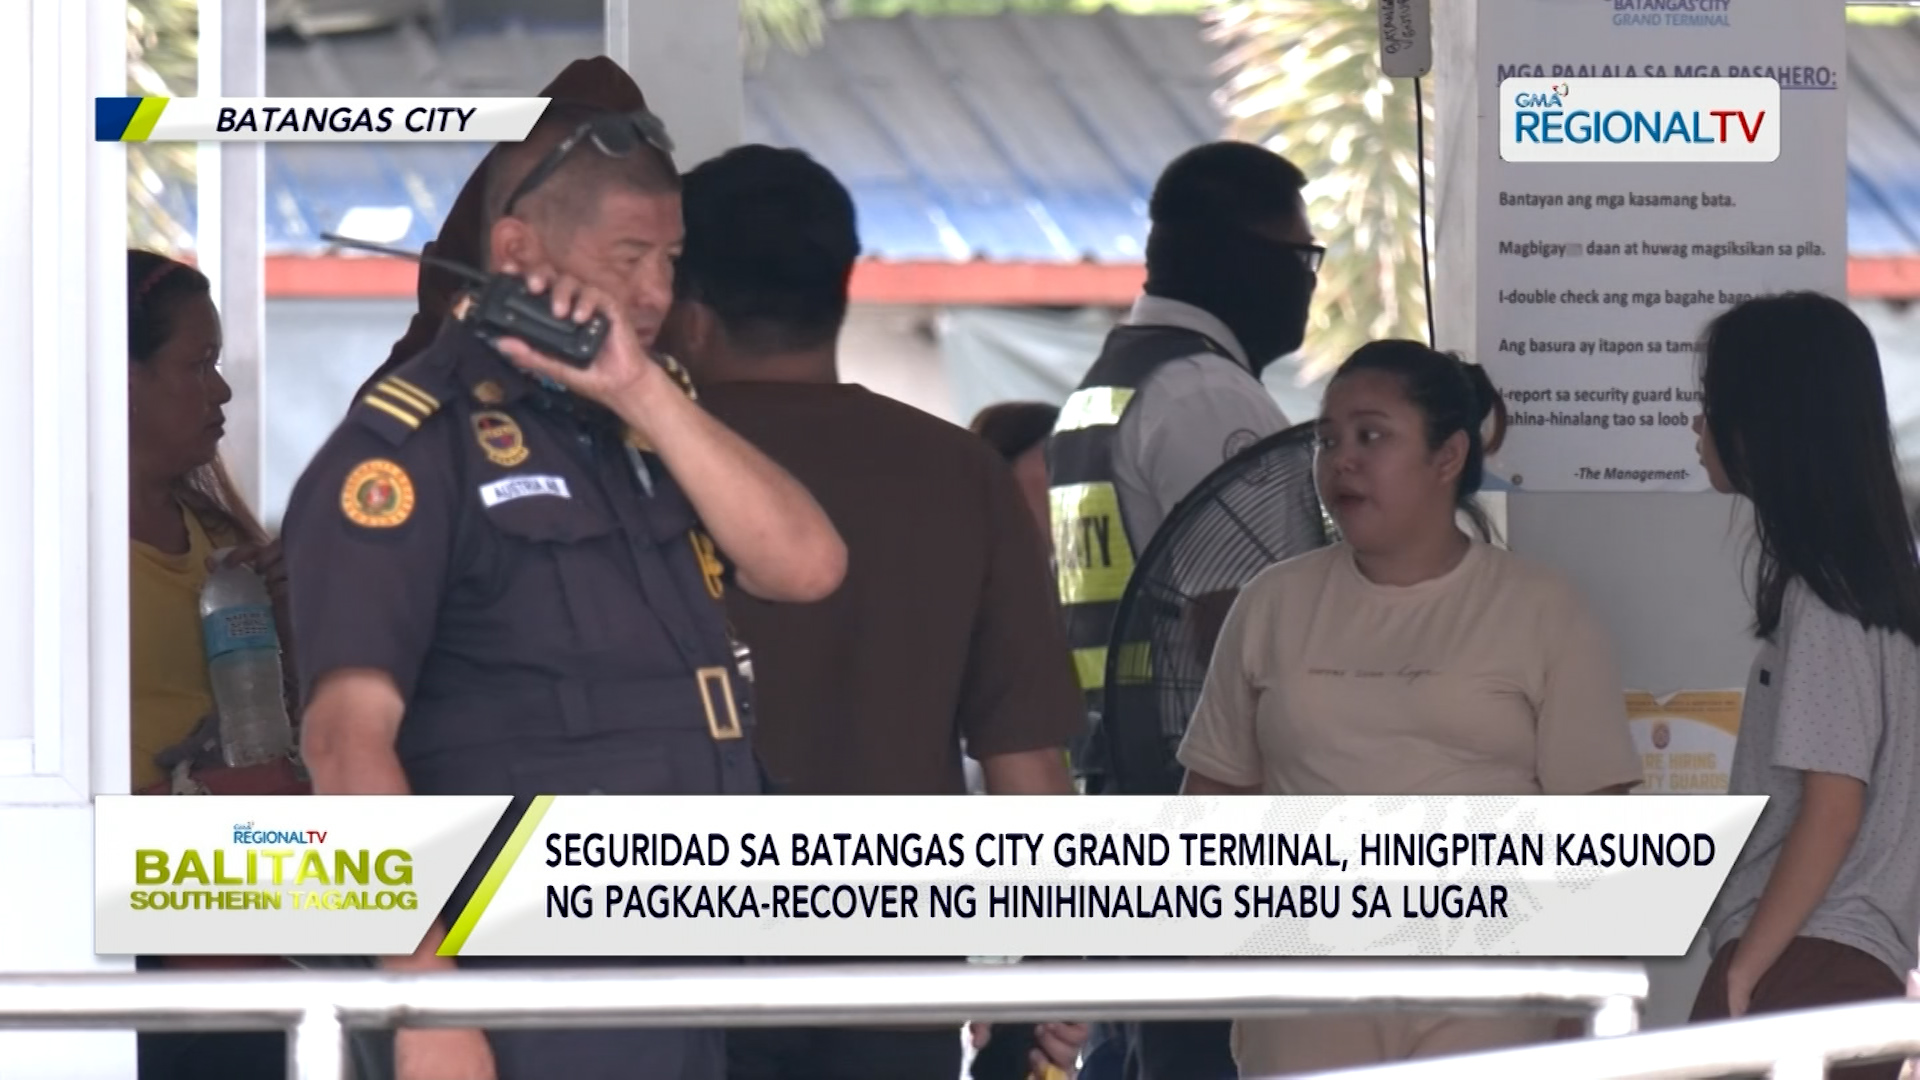 Seguridad sa Batangas City Grand Terminal, mas hinigpitan